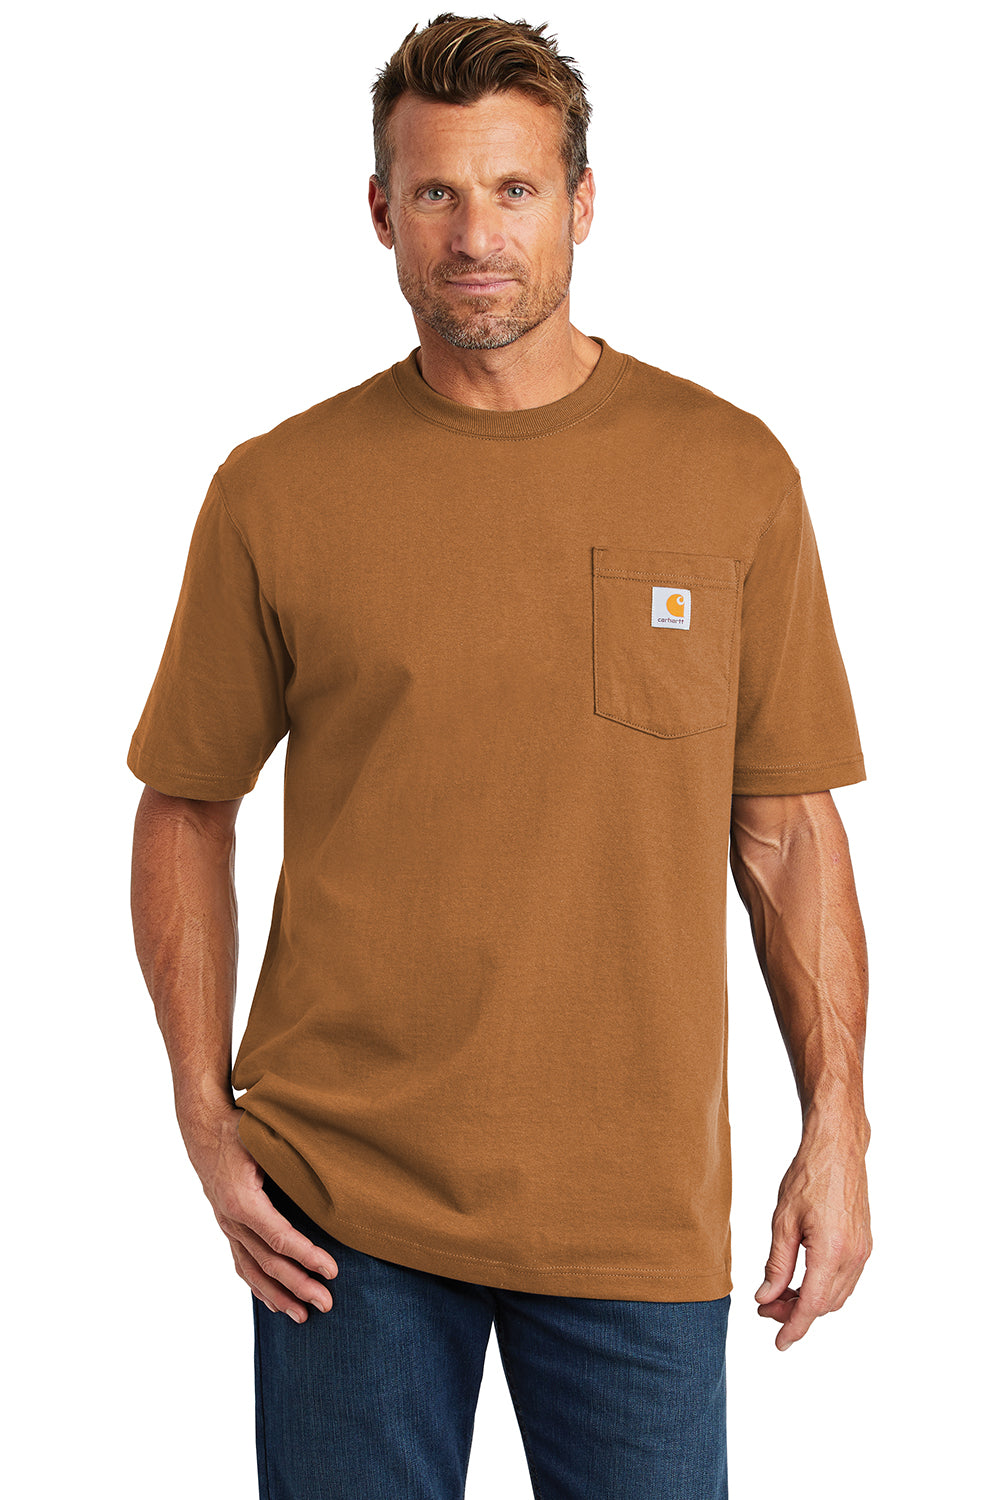 Carhartt CTK87/CTTK87 Mens Workwear Short Sleeve Crewneck T-Shirt w/ Pocket Carhartt Brown Model Front